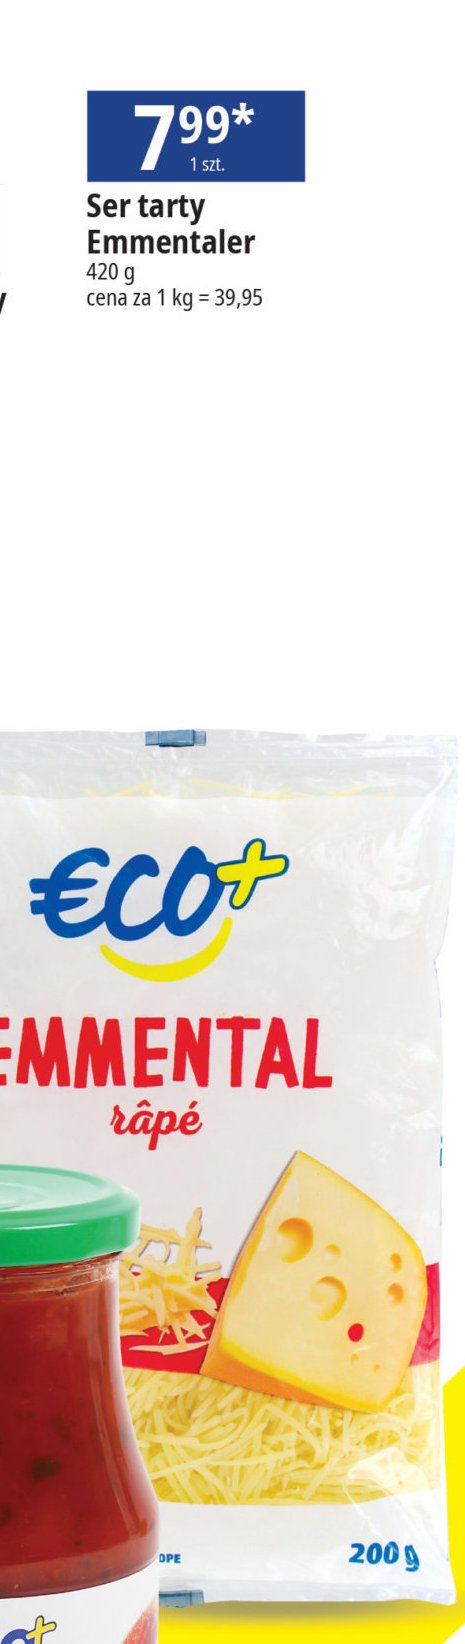 Ser emmentaler tarty Eco+ promocja